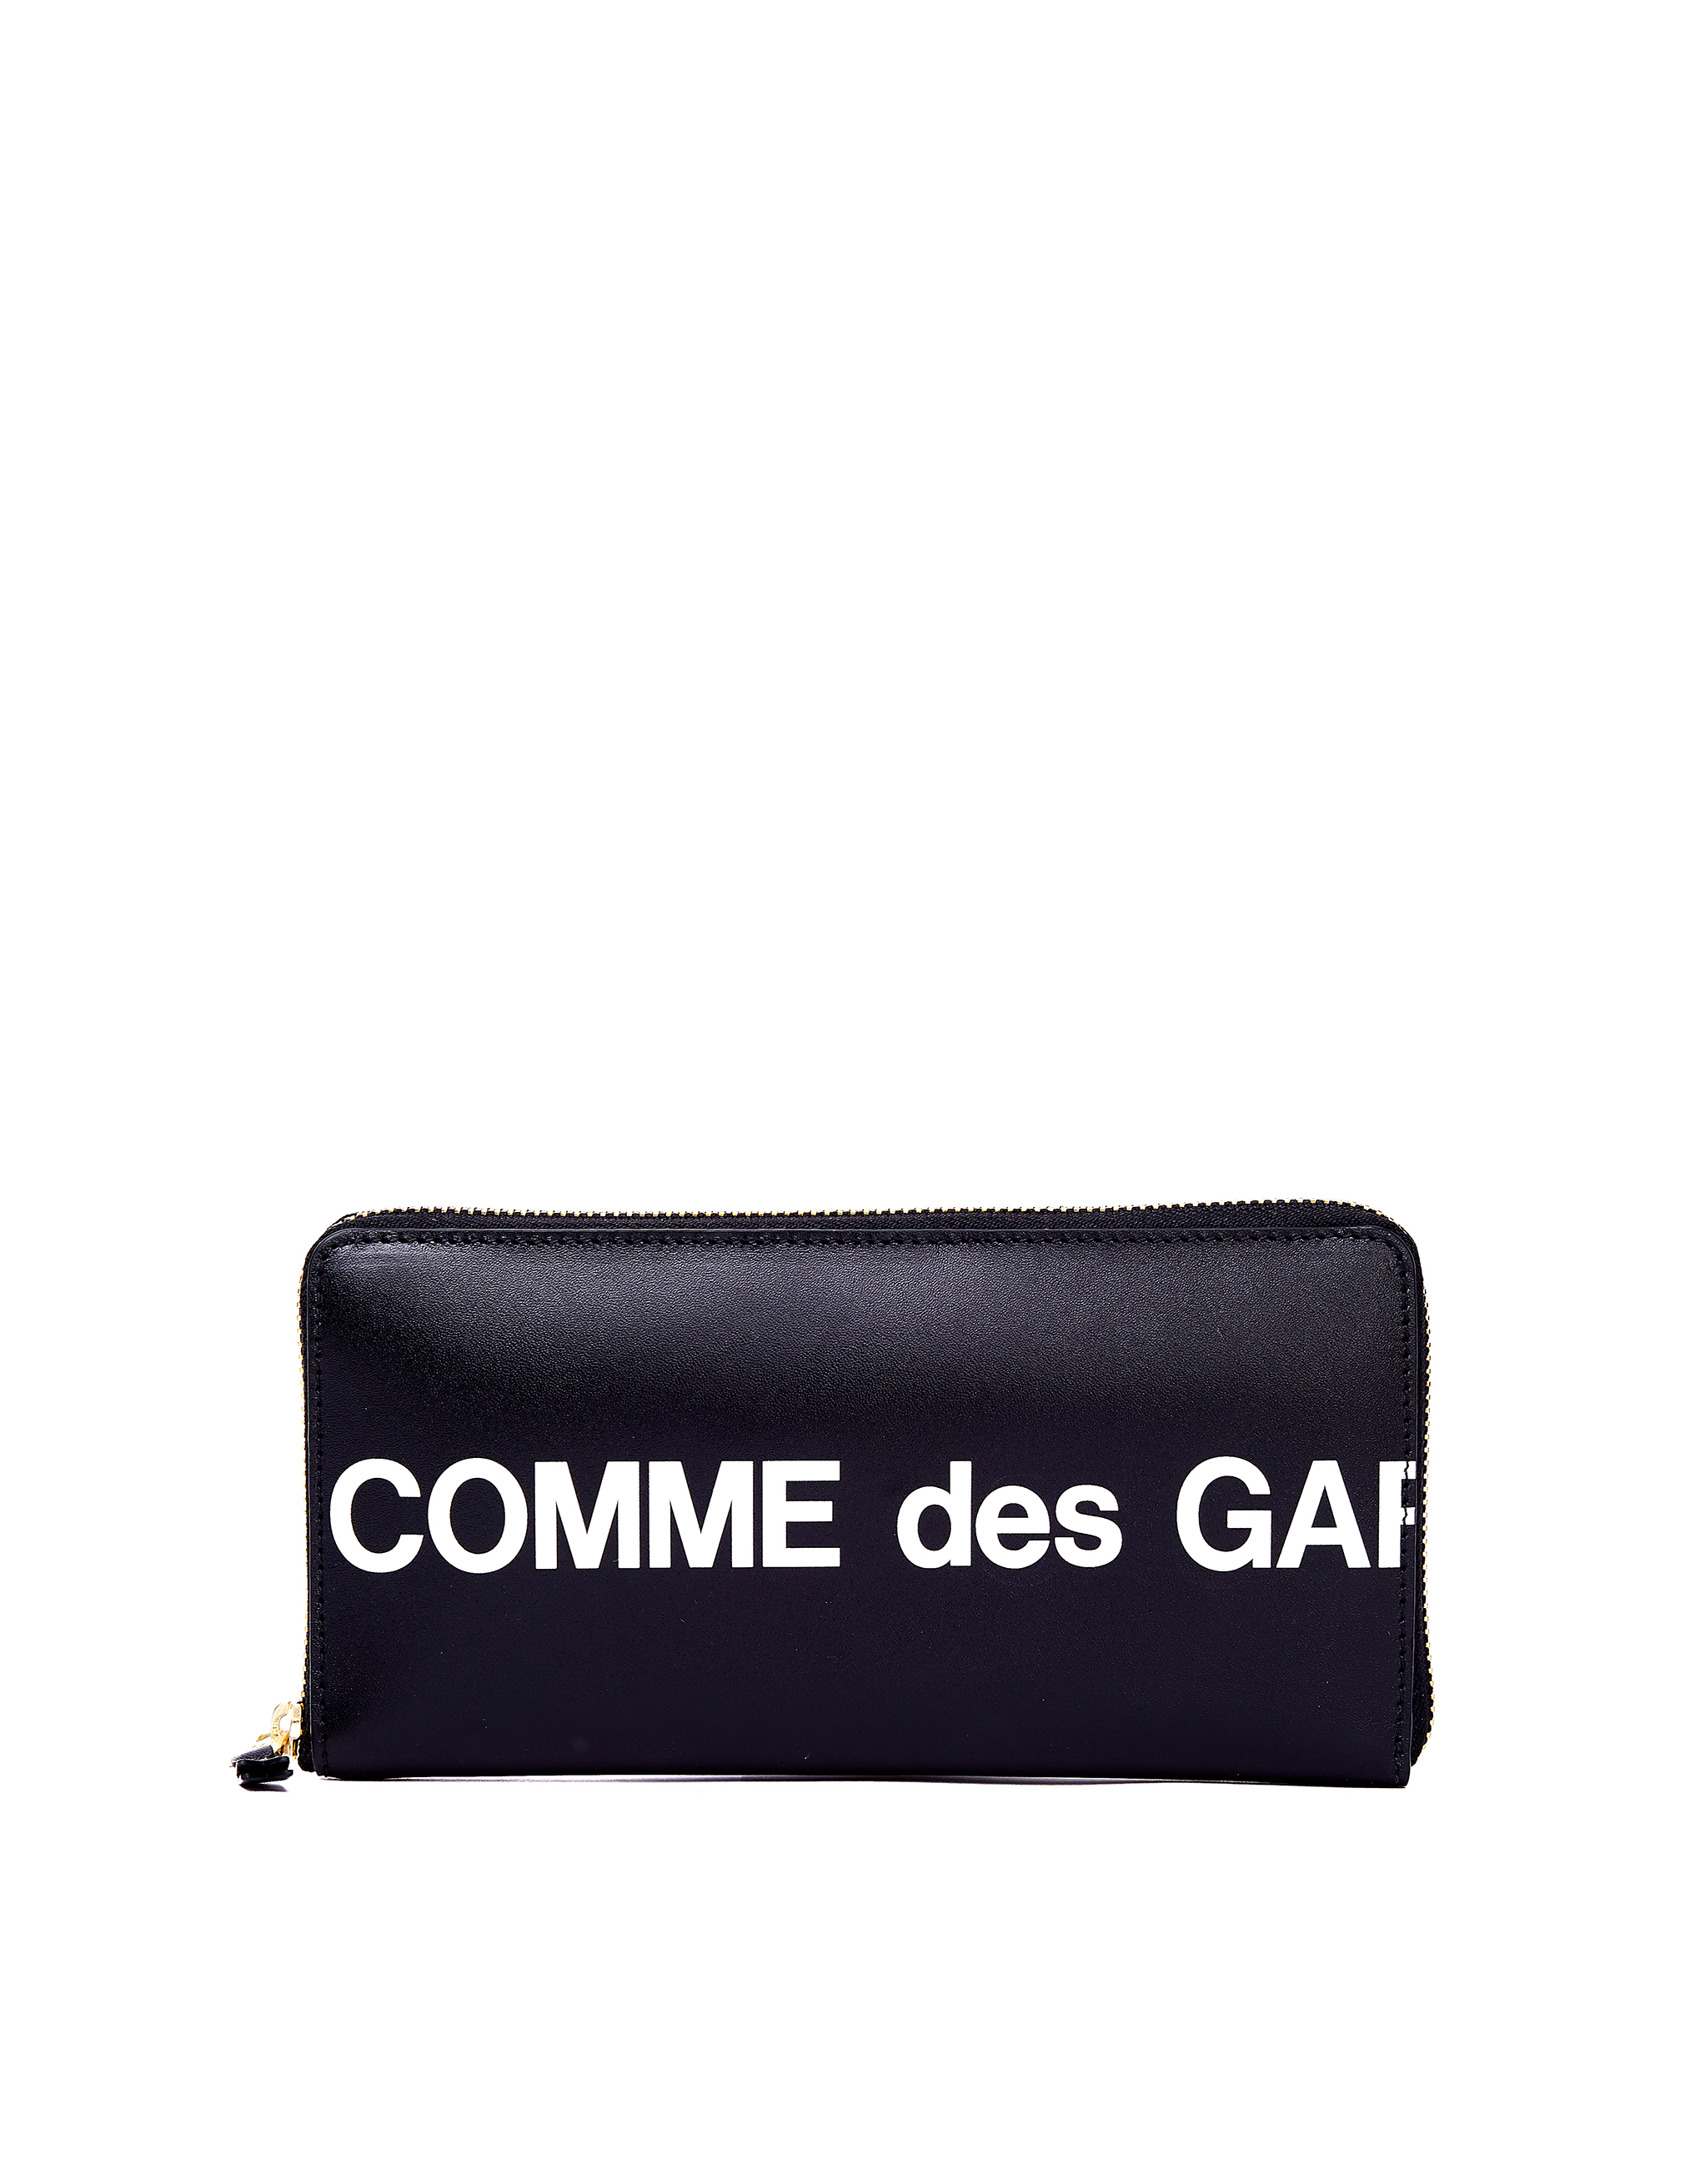 Черный кожаный кошелек Comme des Garcons Wallets SA0110HL/blk, размер One Size SA0110HL/blk - фото 1